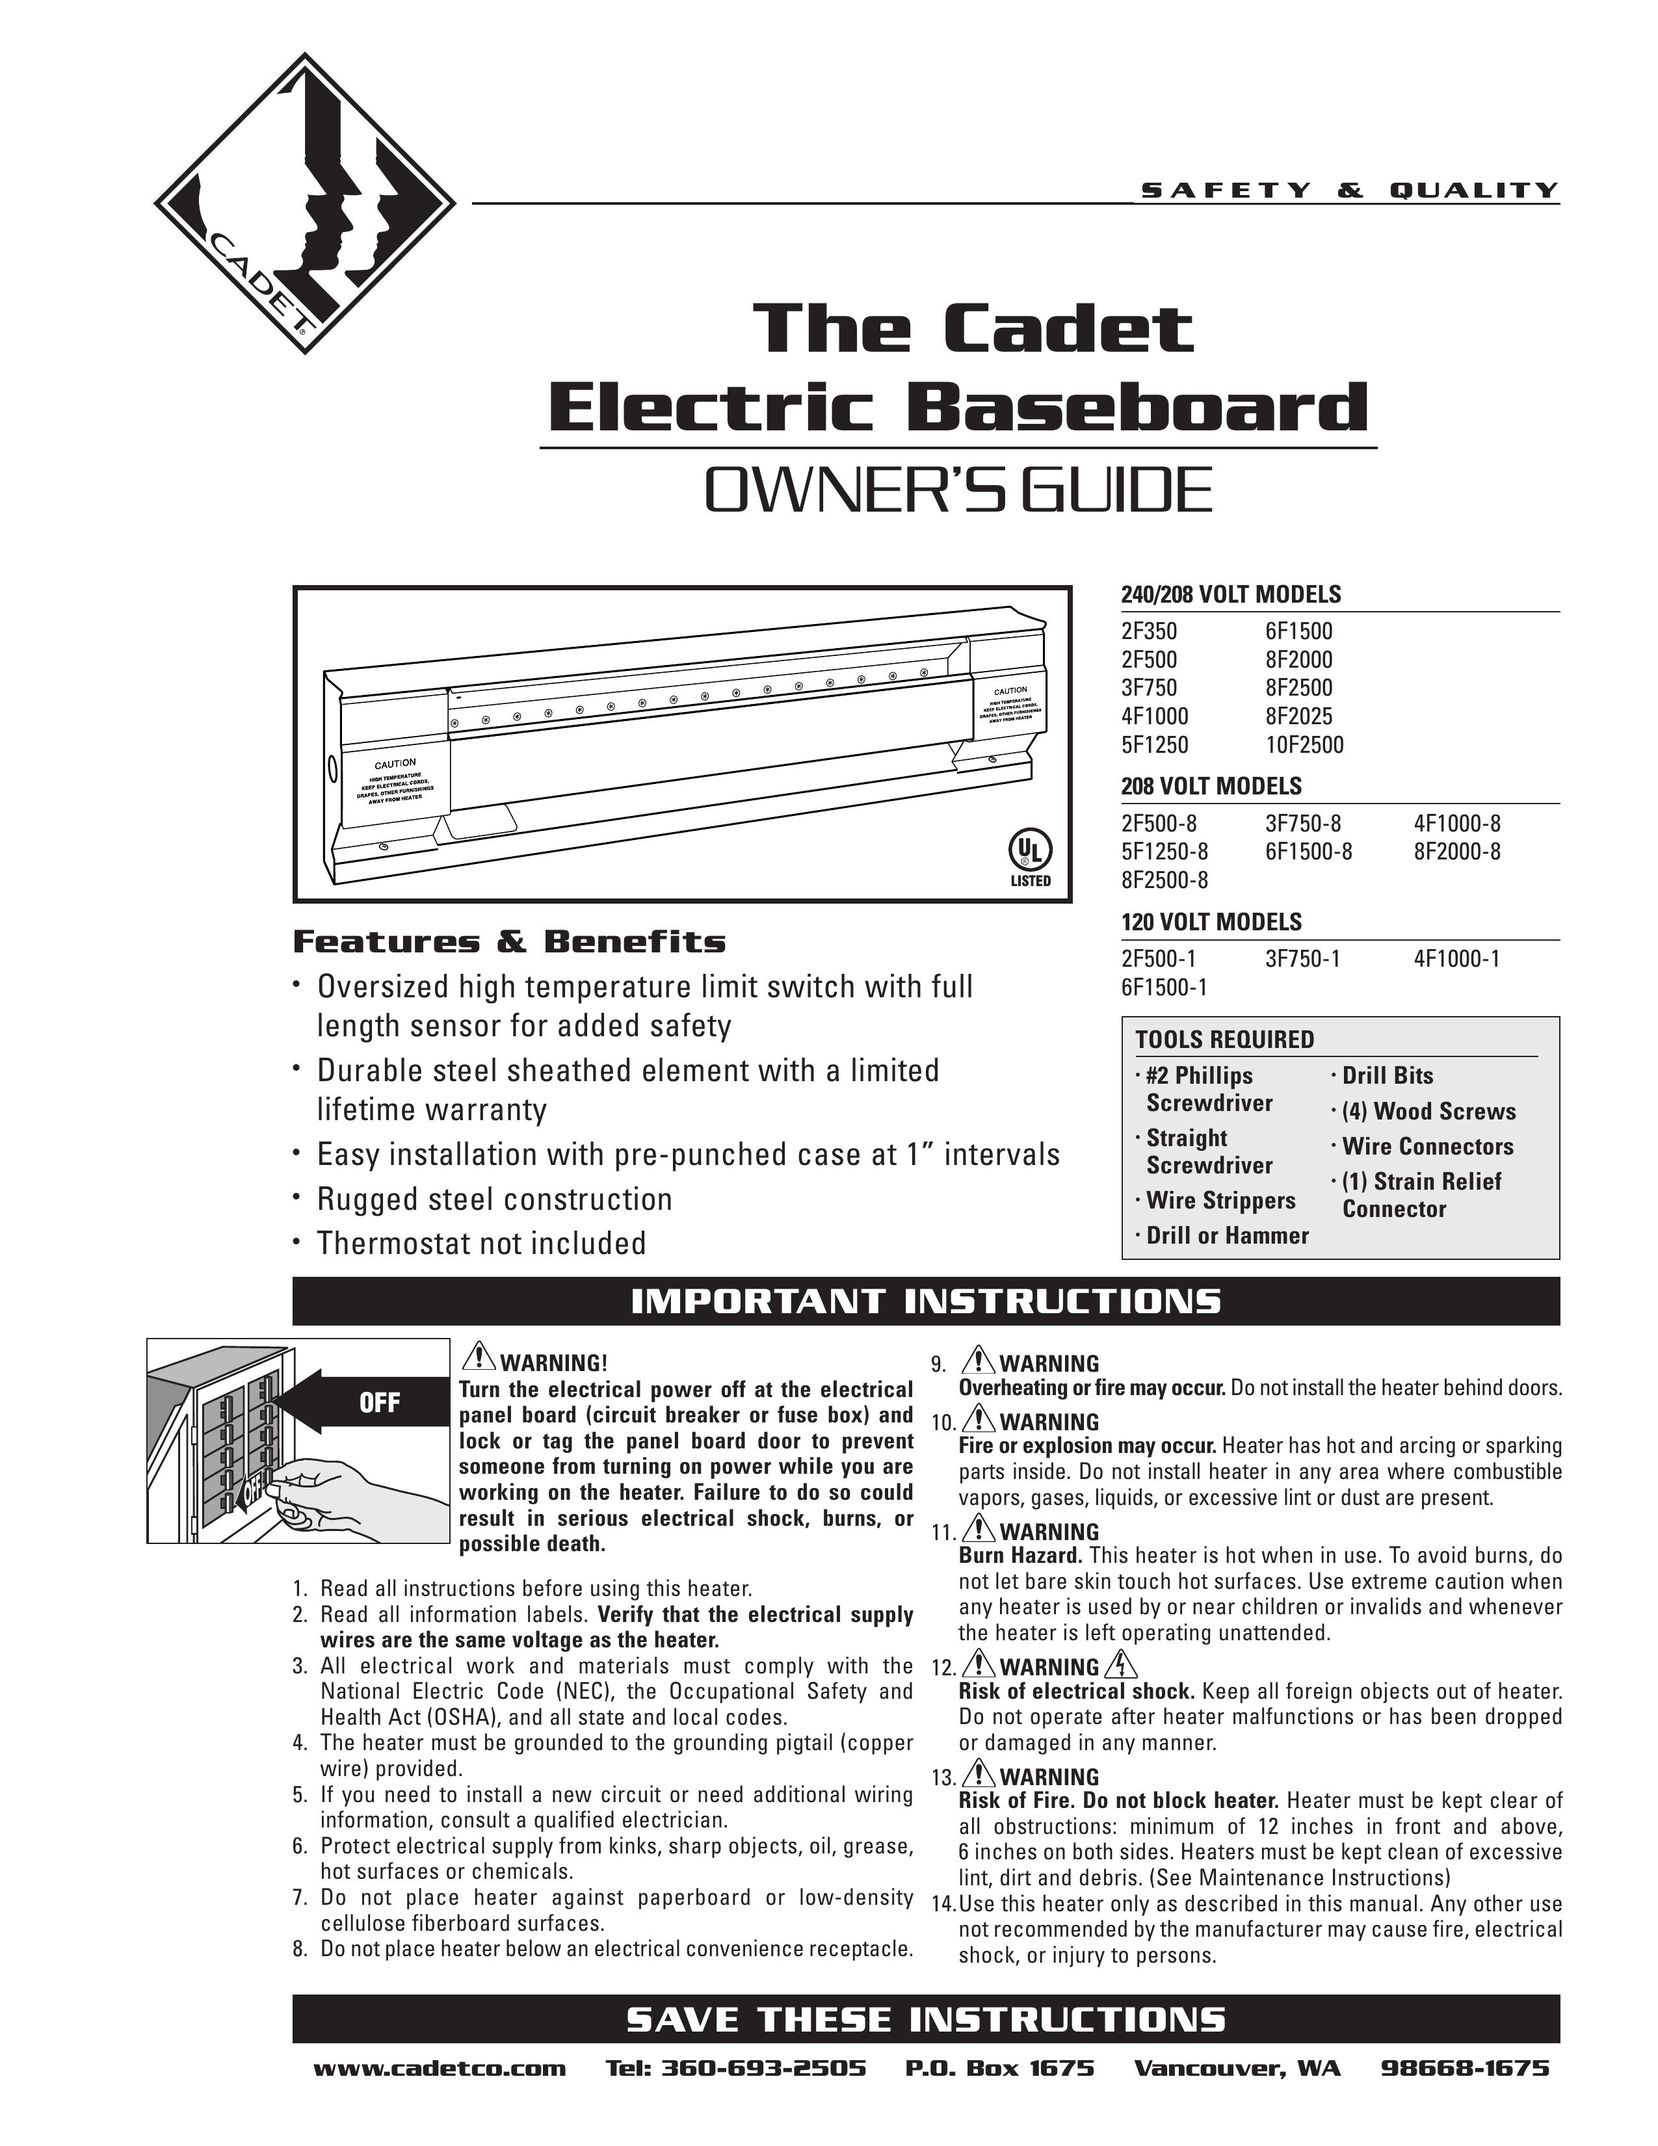 Cadet 8F2500-8 Electric Heater User Manual